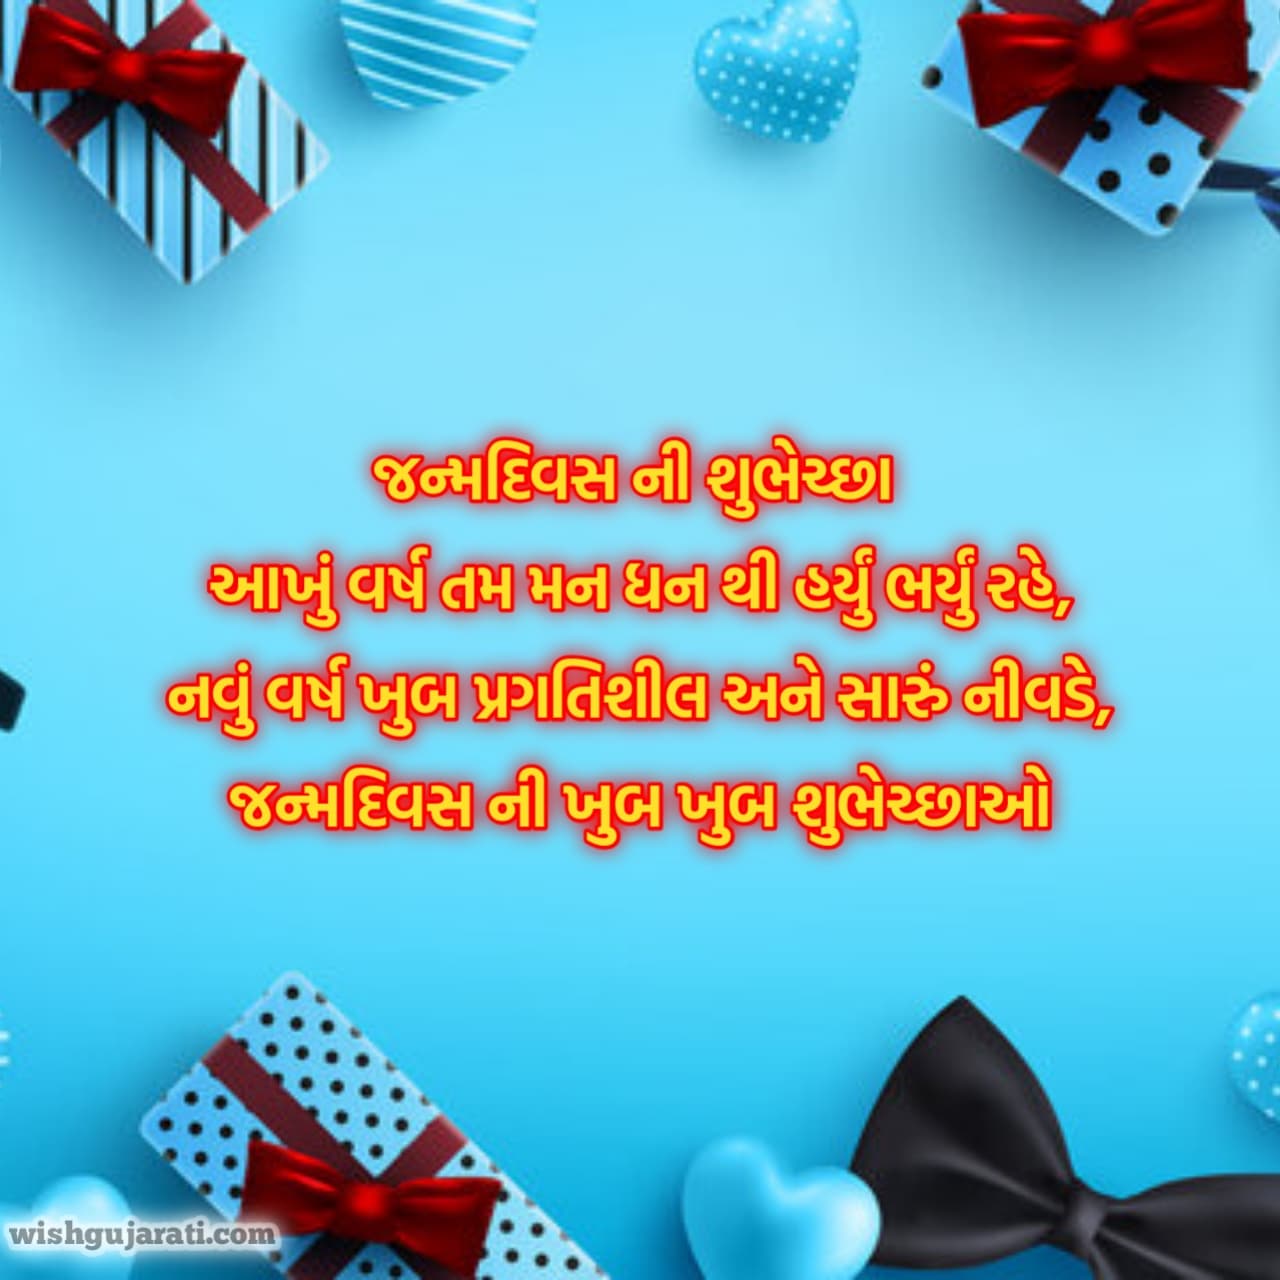 happy birthday wishes in gujarati text for friend